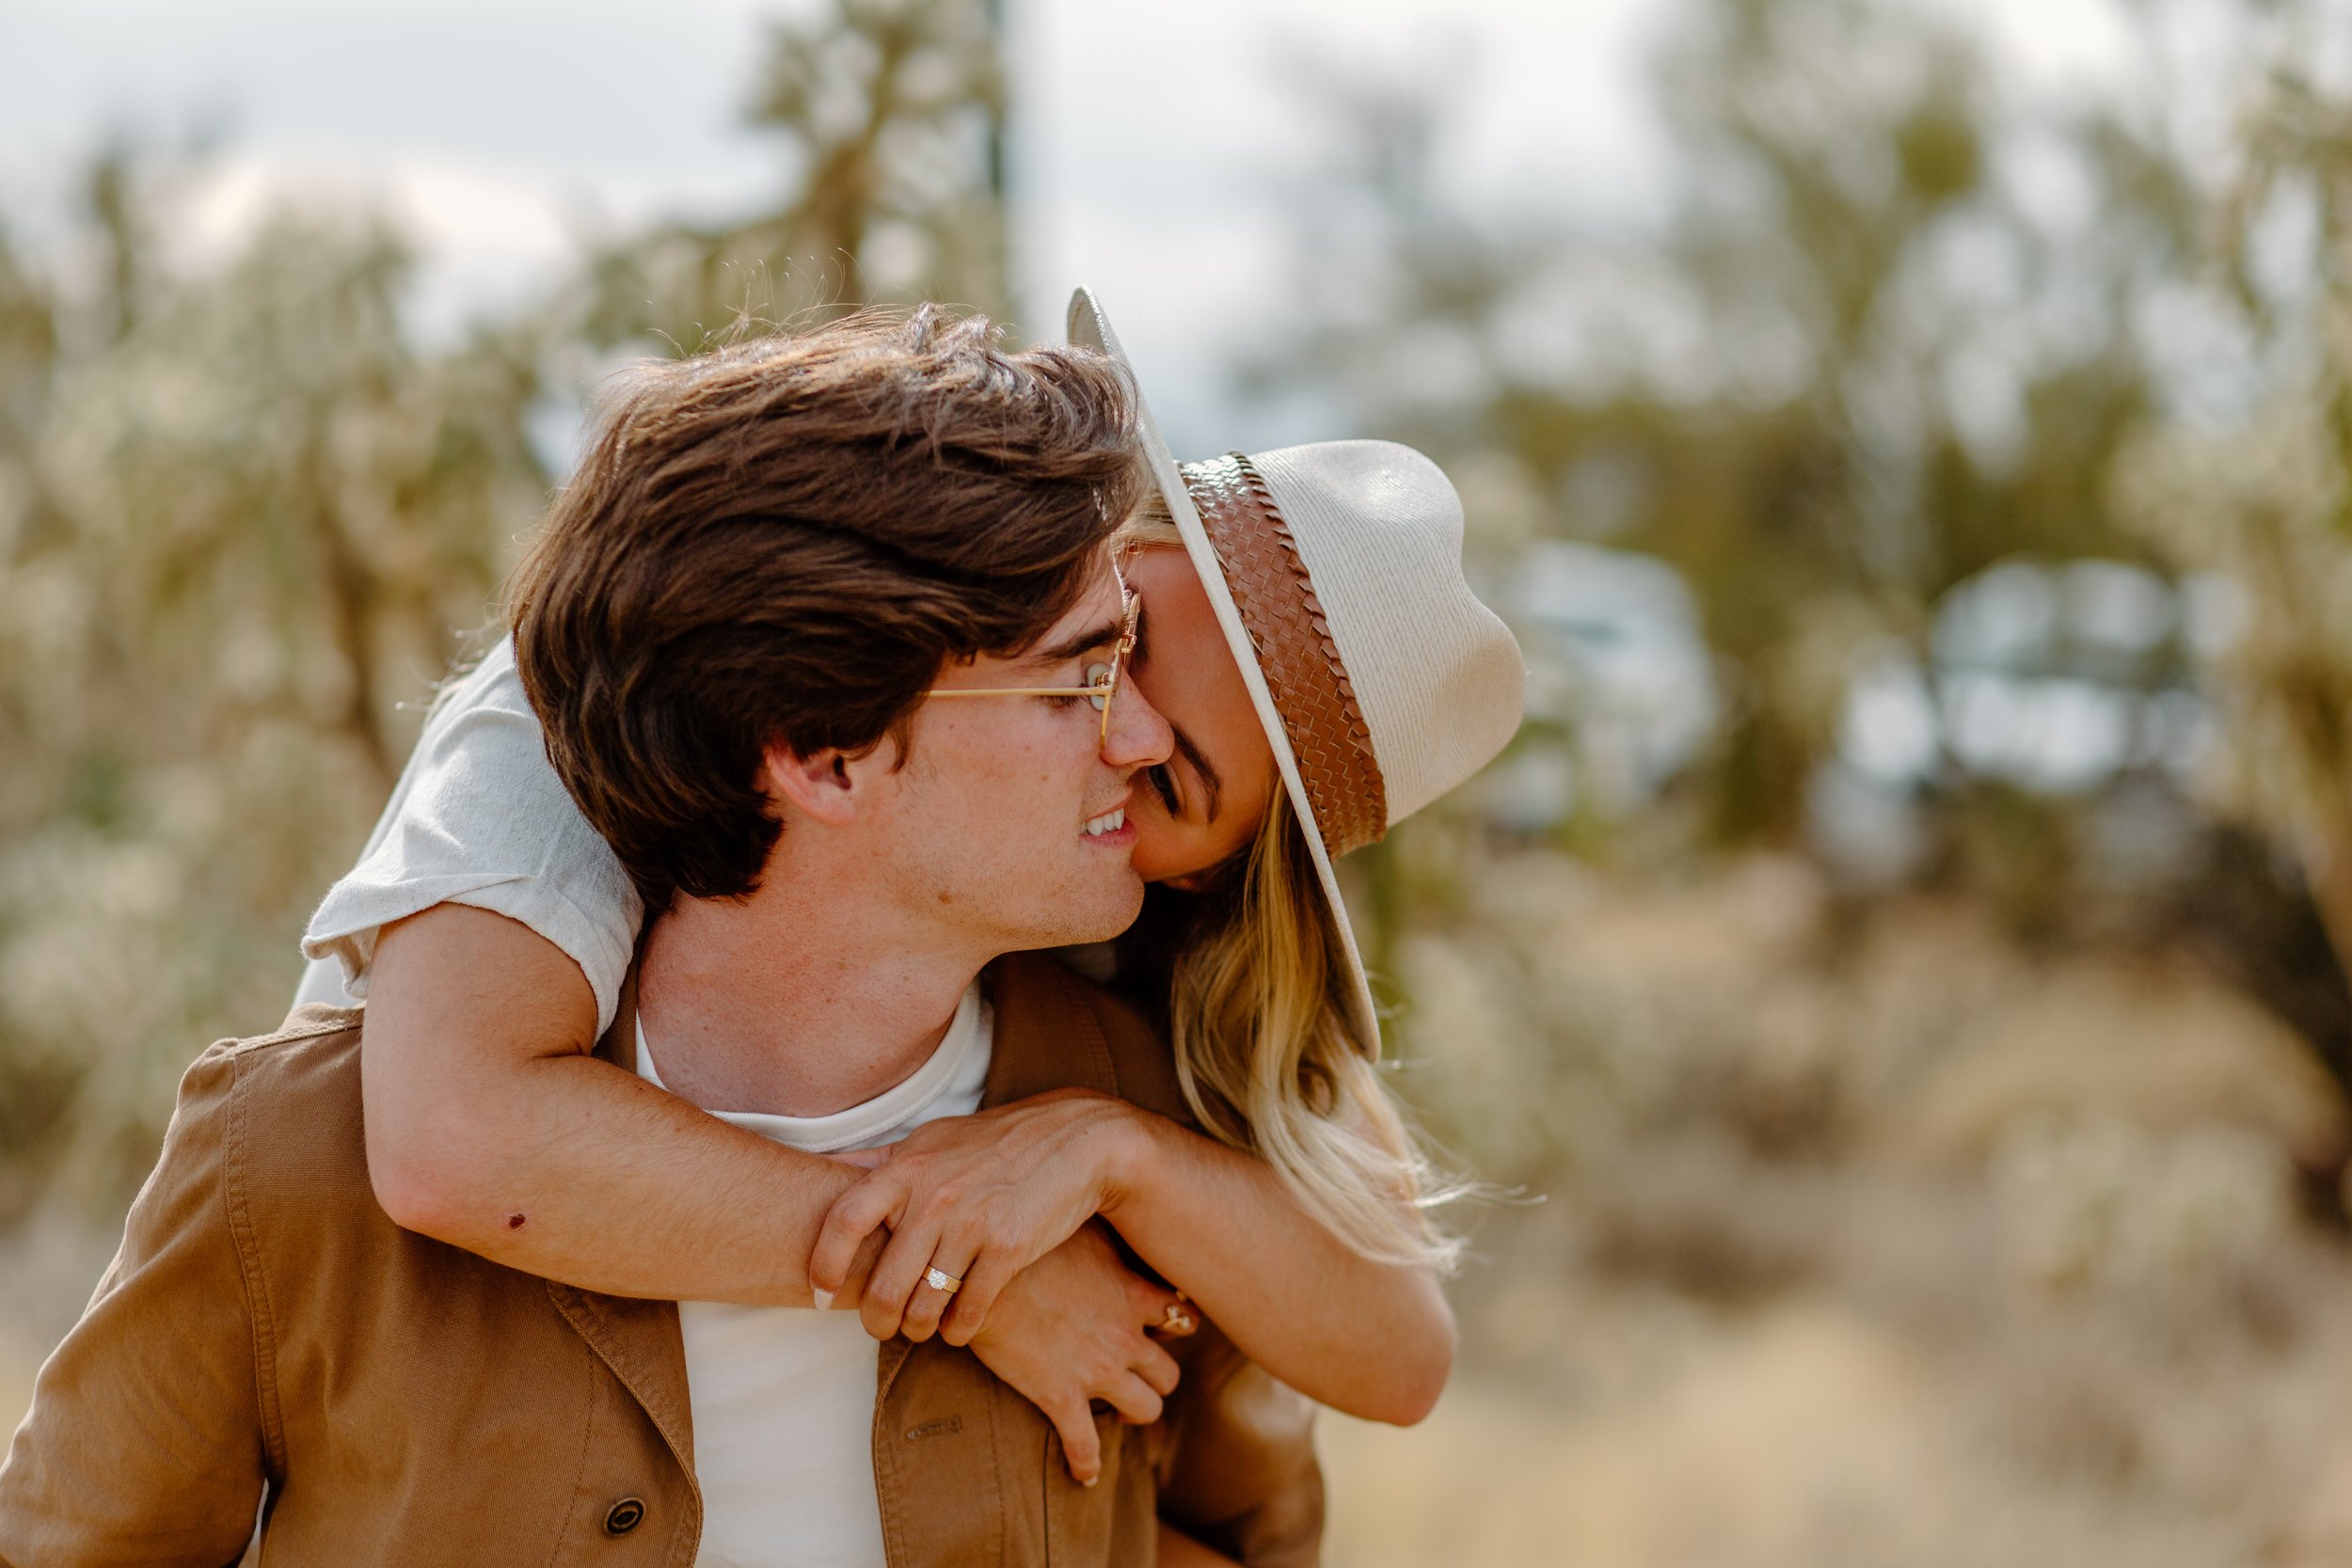  Woman kisses her boyfriend’s cheek while on his back in a desert setting in Tucson Arizona 